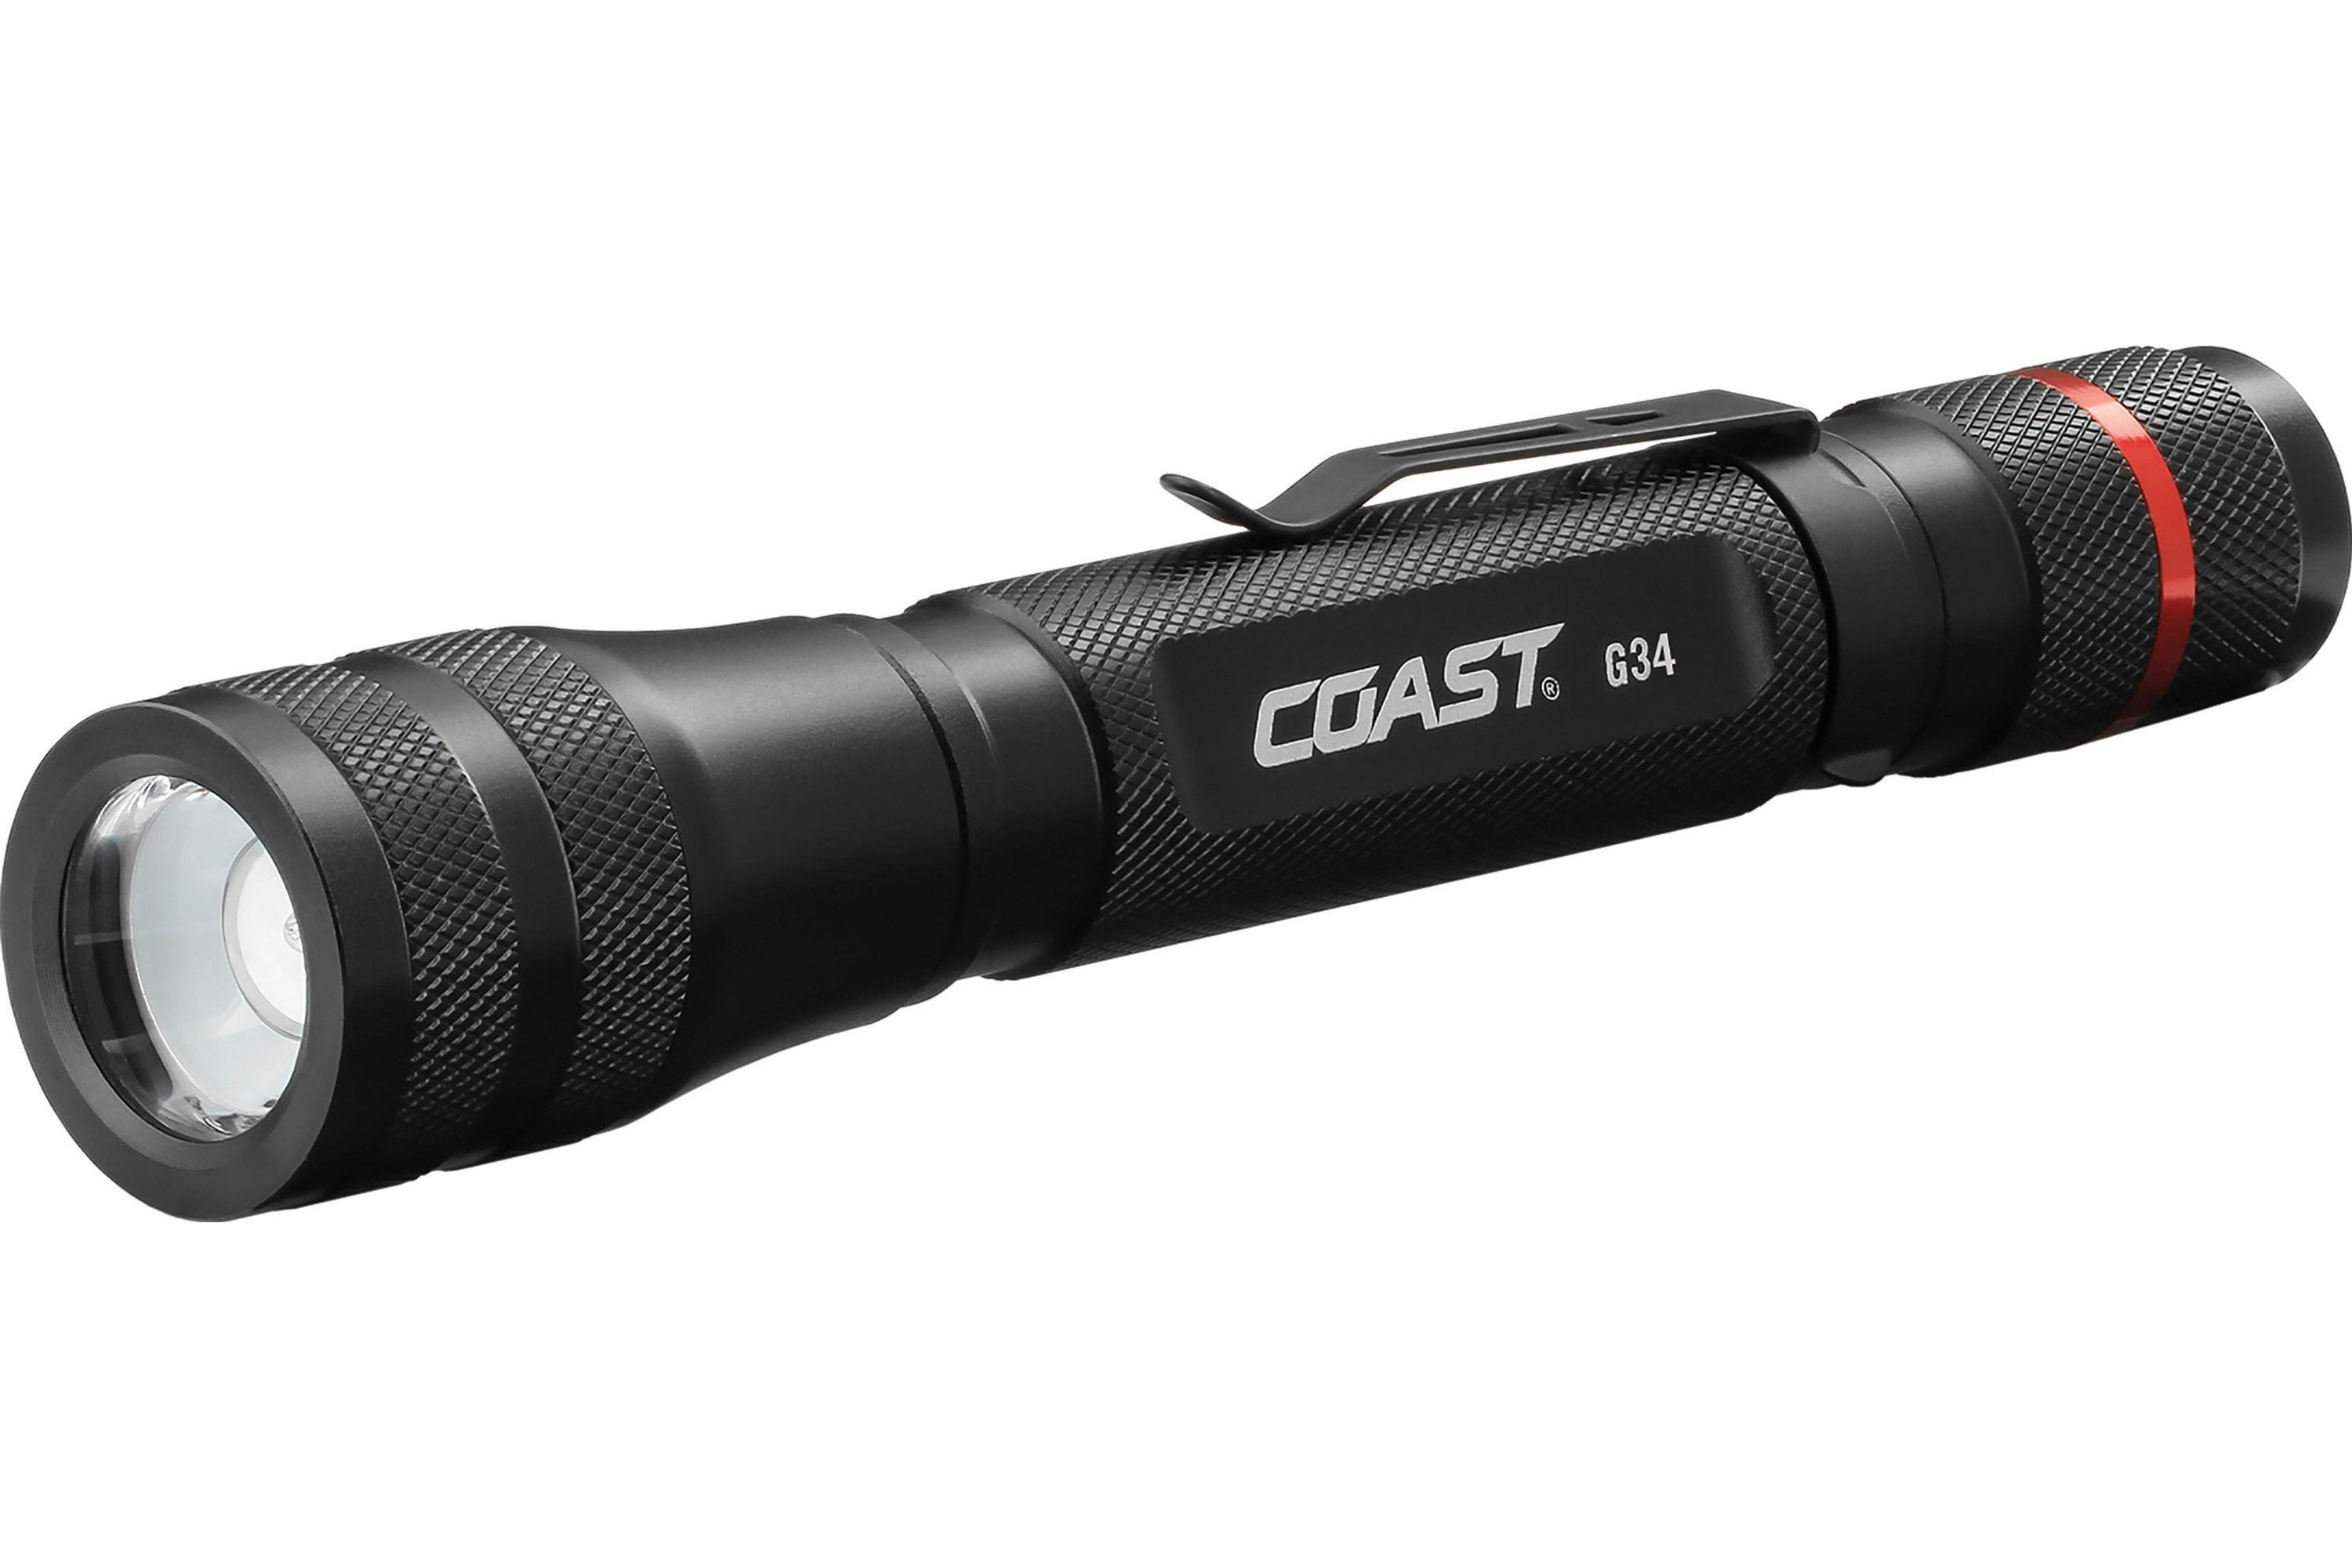 COAST G34 370 Lumen Twist Focusing Handheld LED Flashlight, 2 x AA Batteries Included